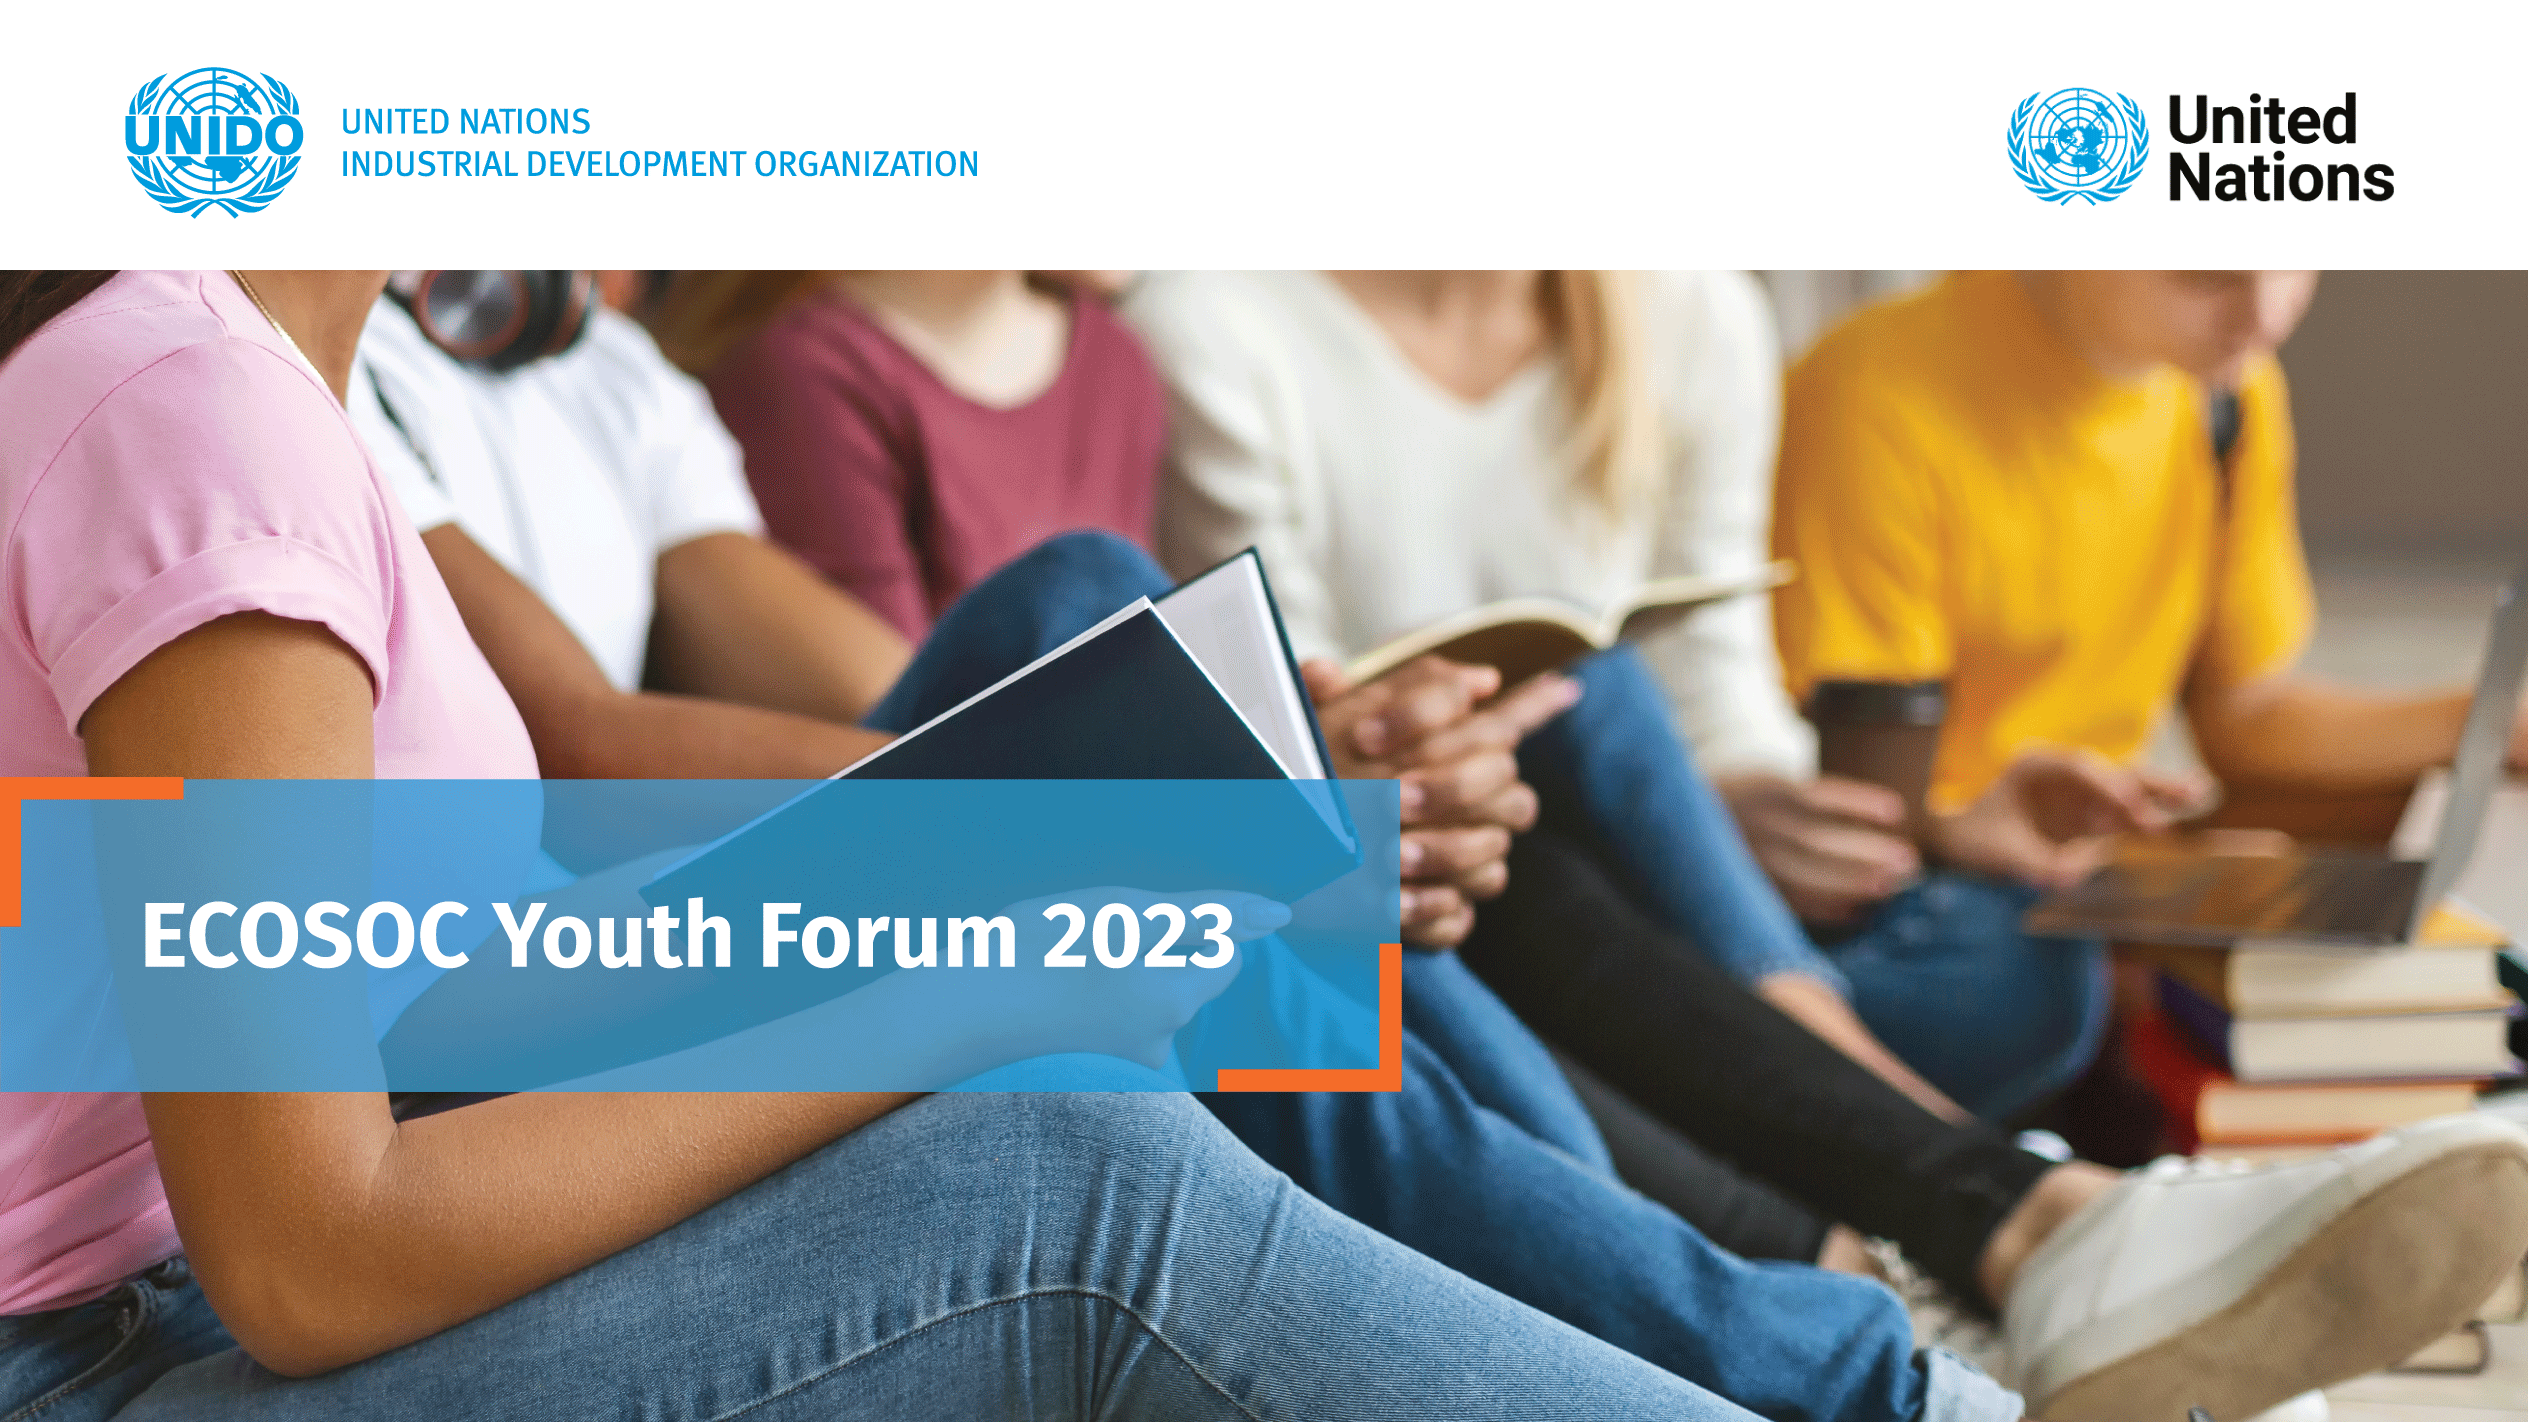 ECOSOC Youth Forum 2023 UNIDO